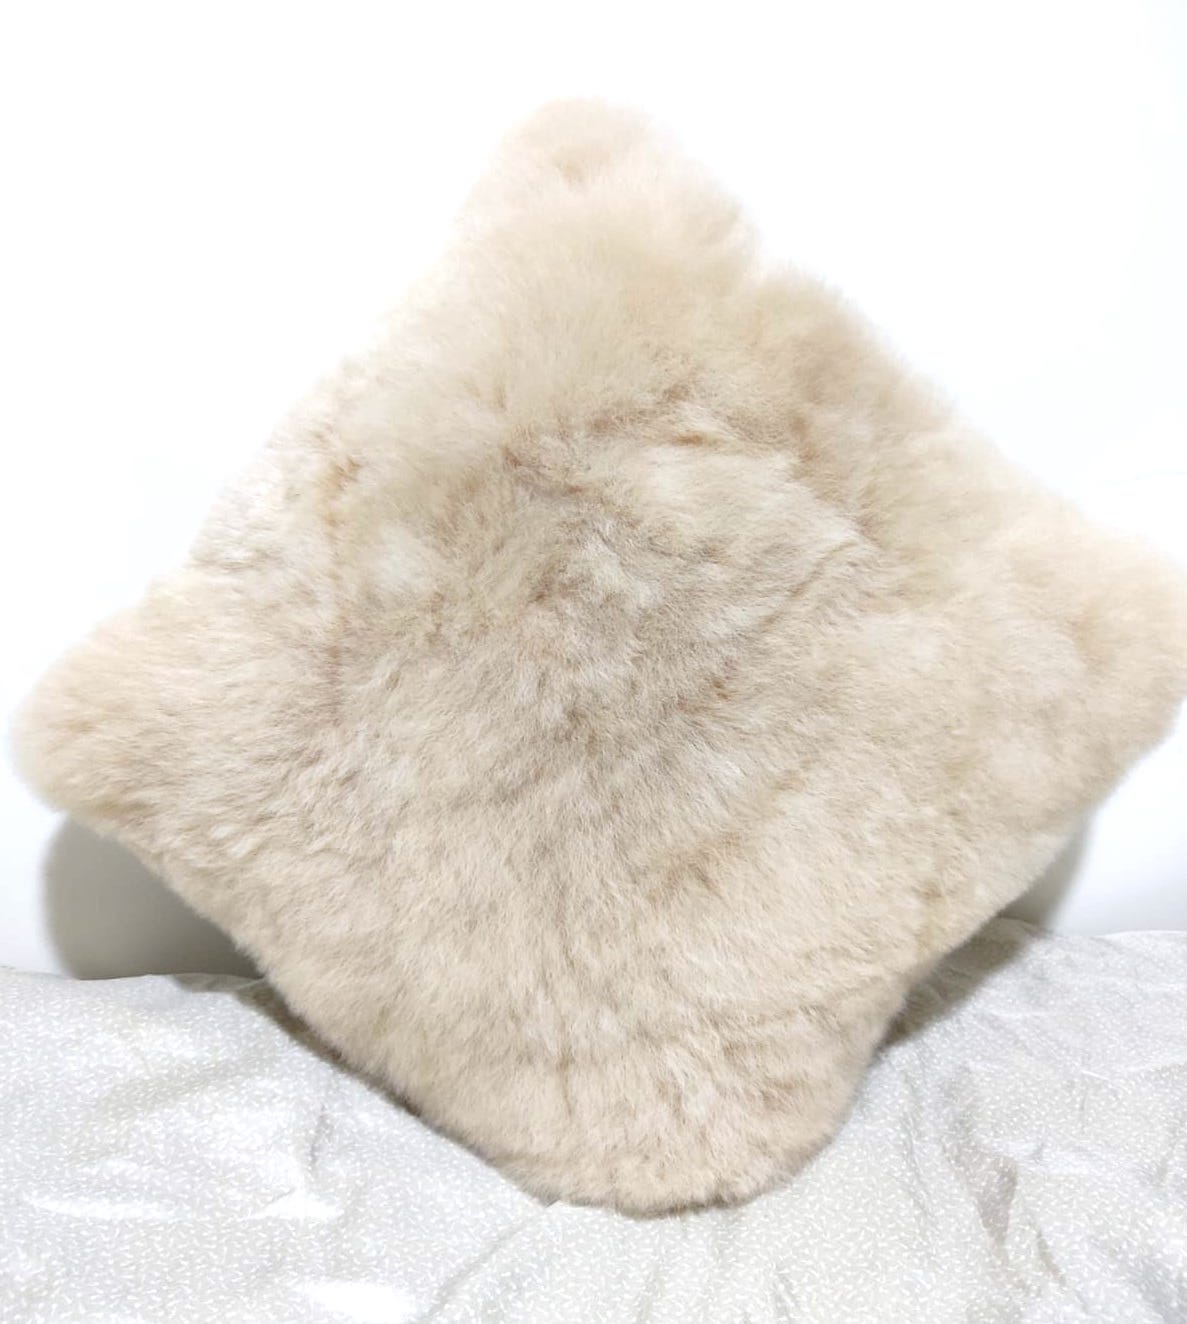 Mongolian Faux Fur Pillow Cover - Camel Brown